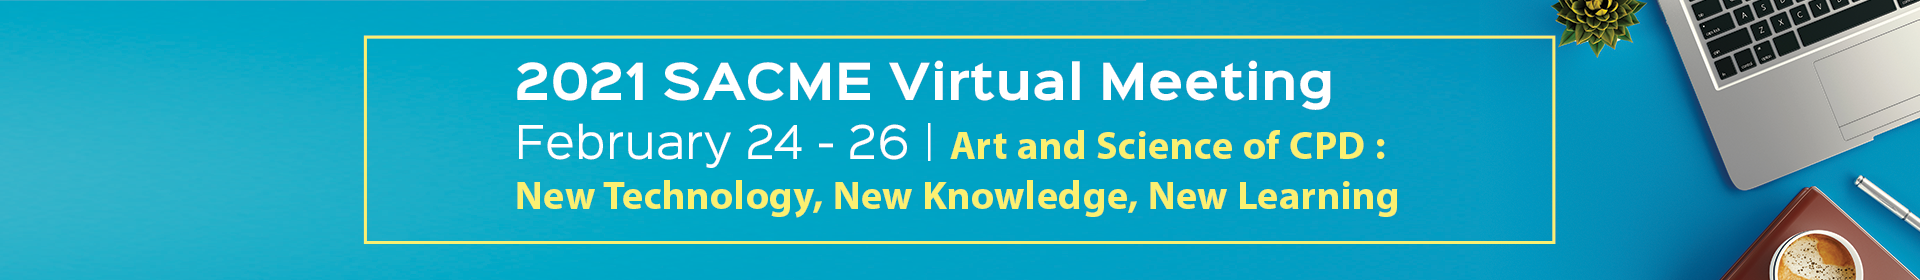 2021 SACME Virtual Meeting Event Banner